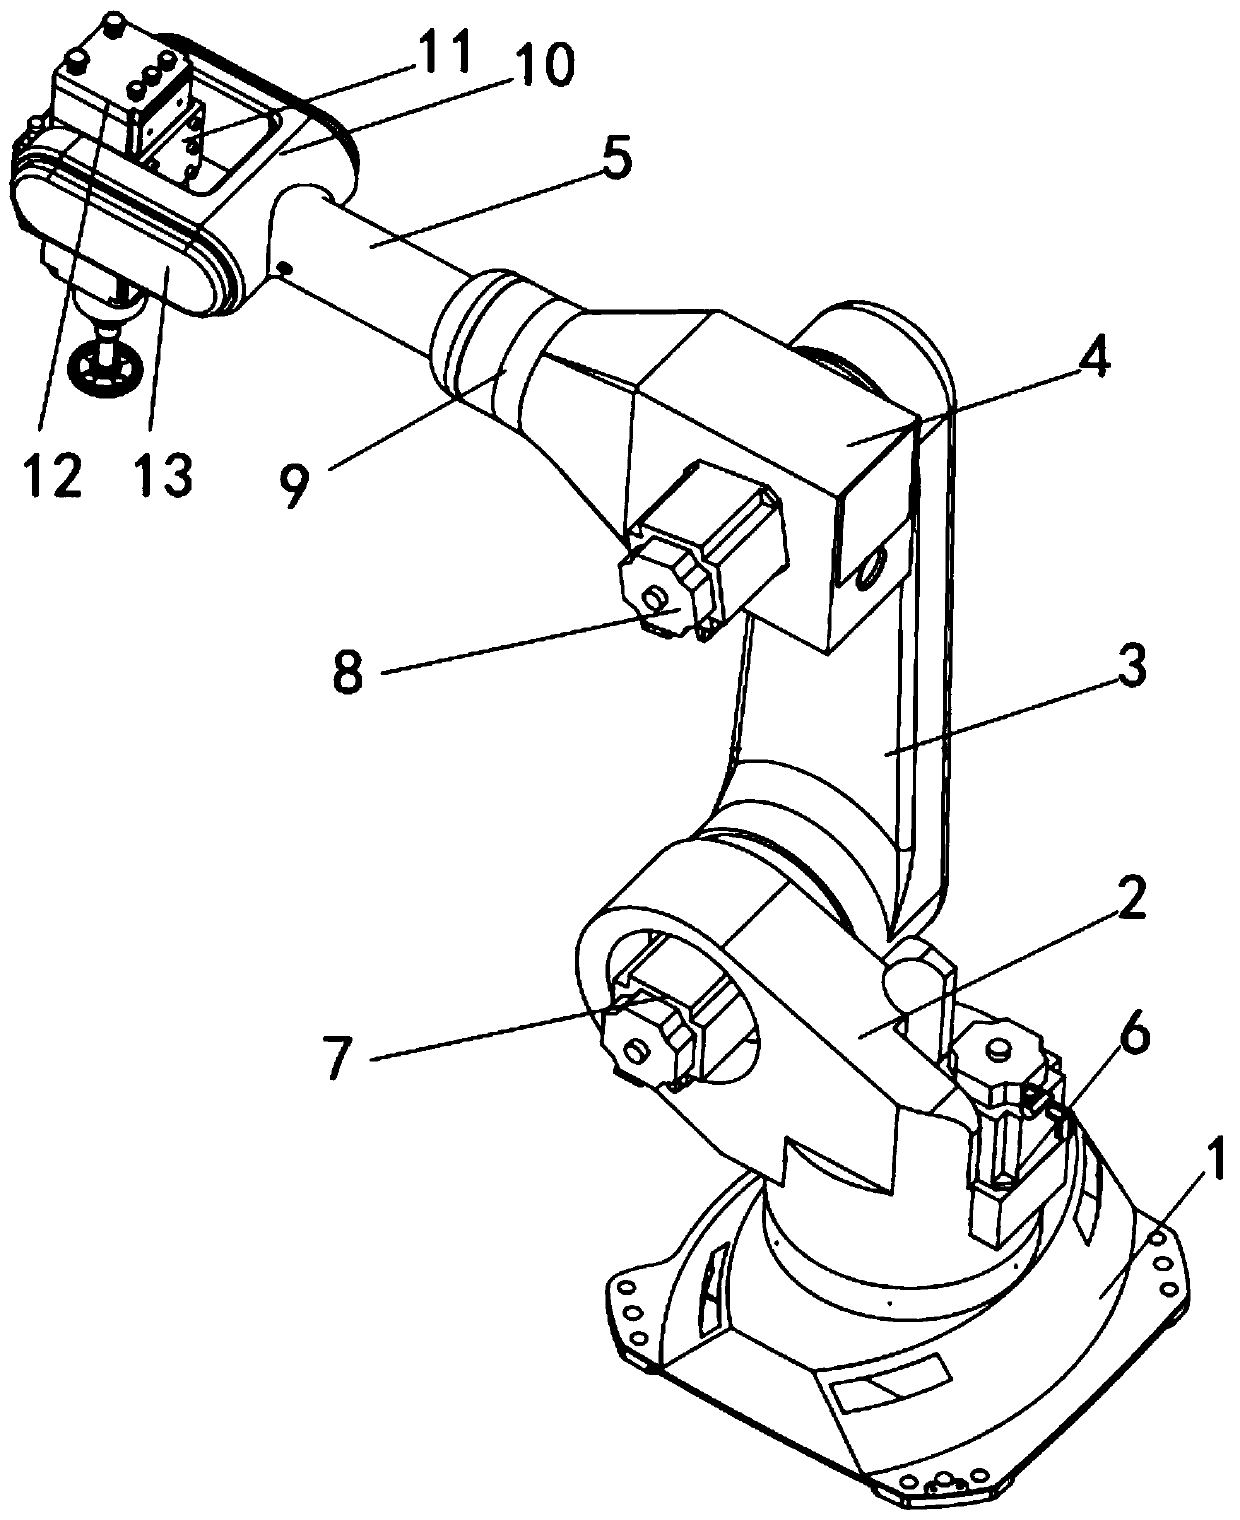 Five-axis grinding robot